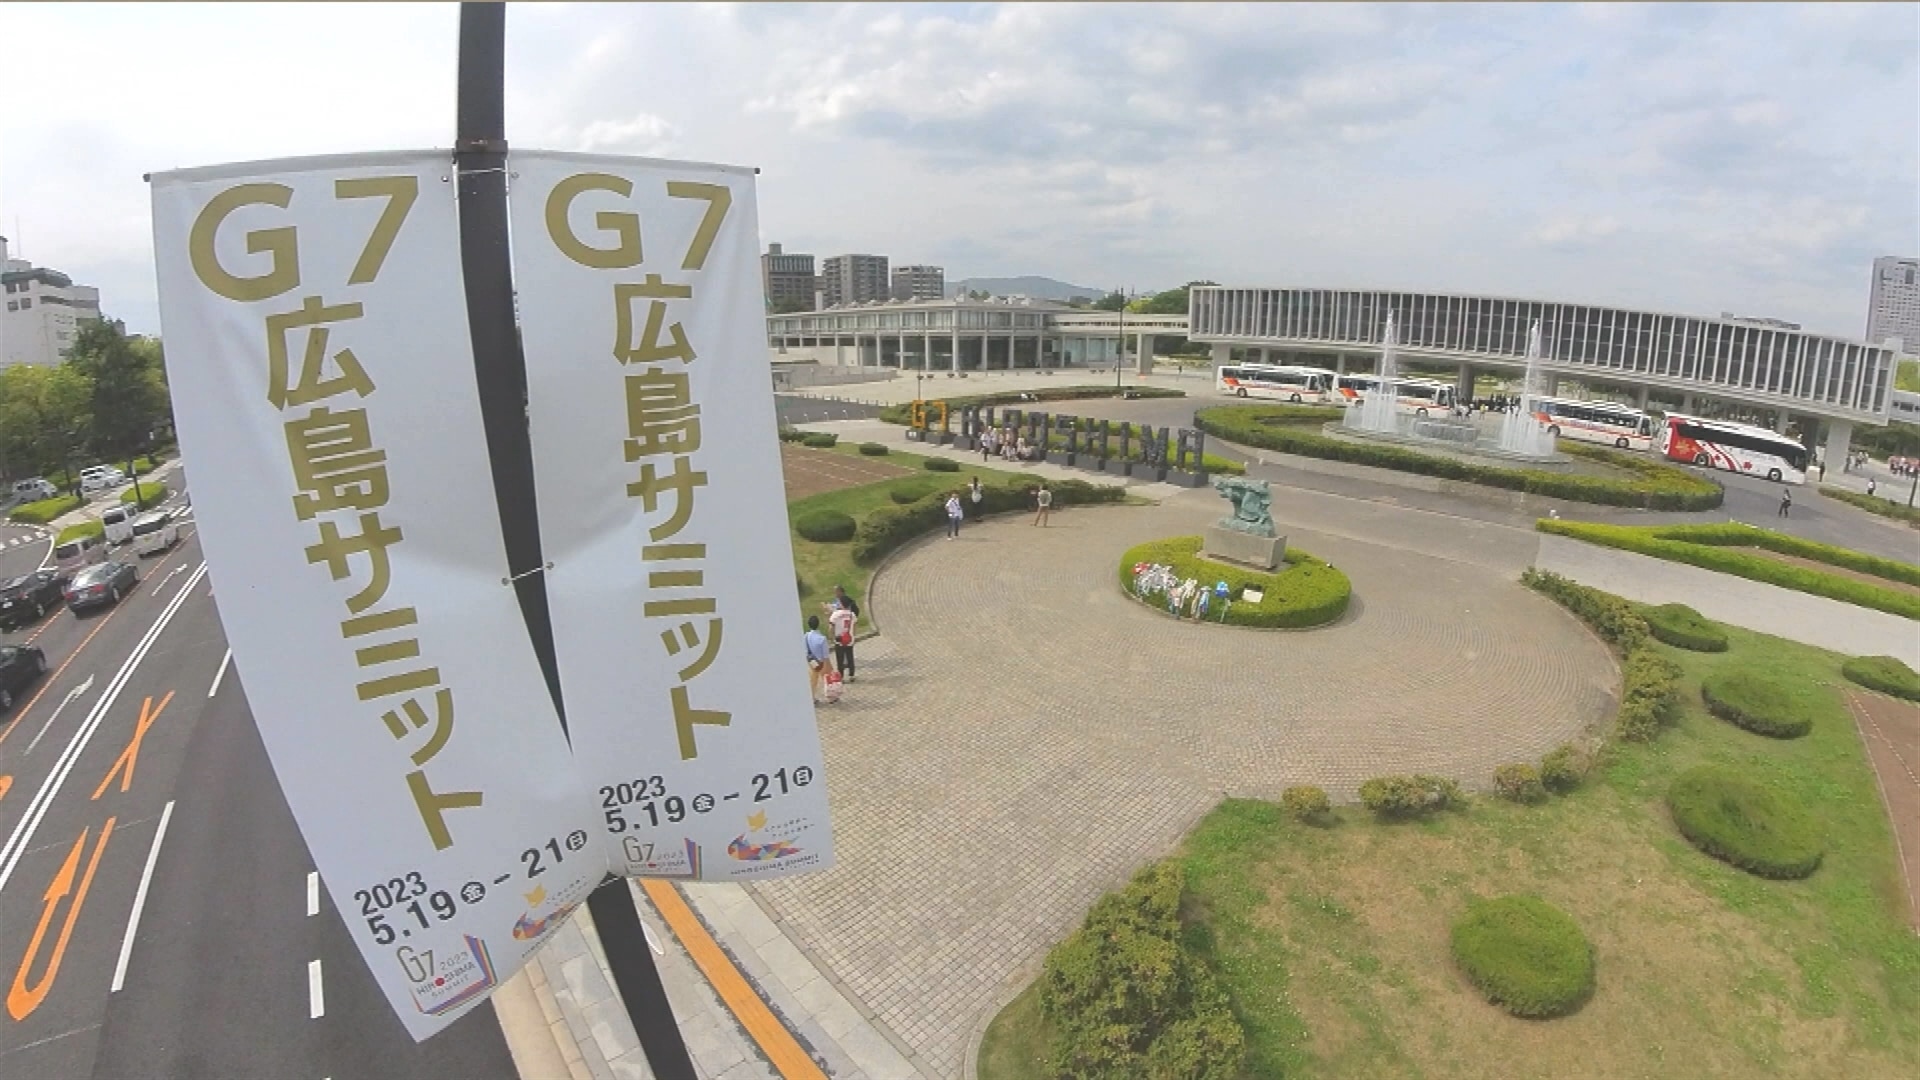 G7広島サミット